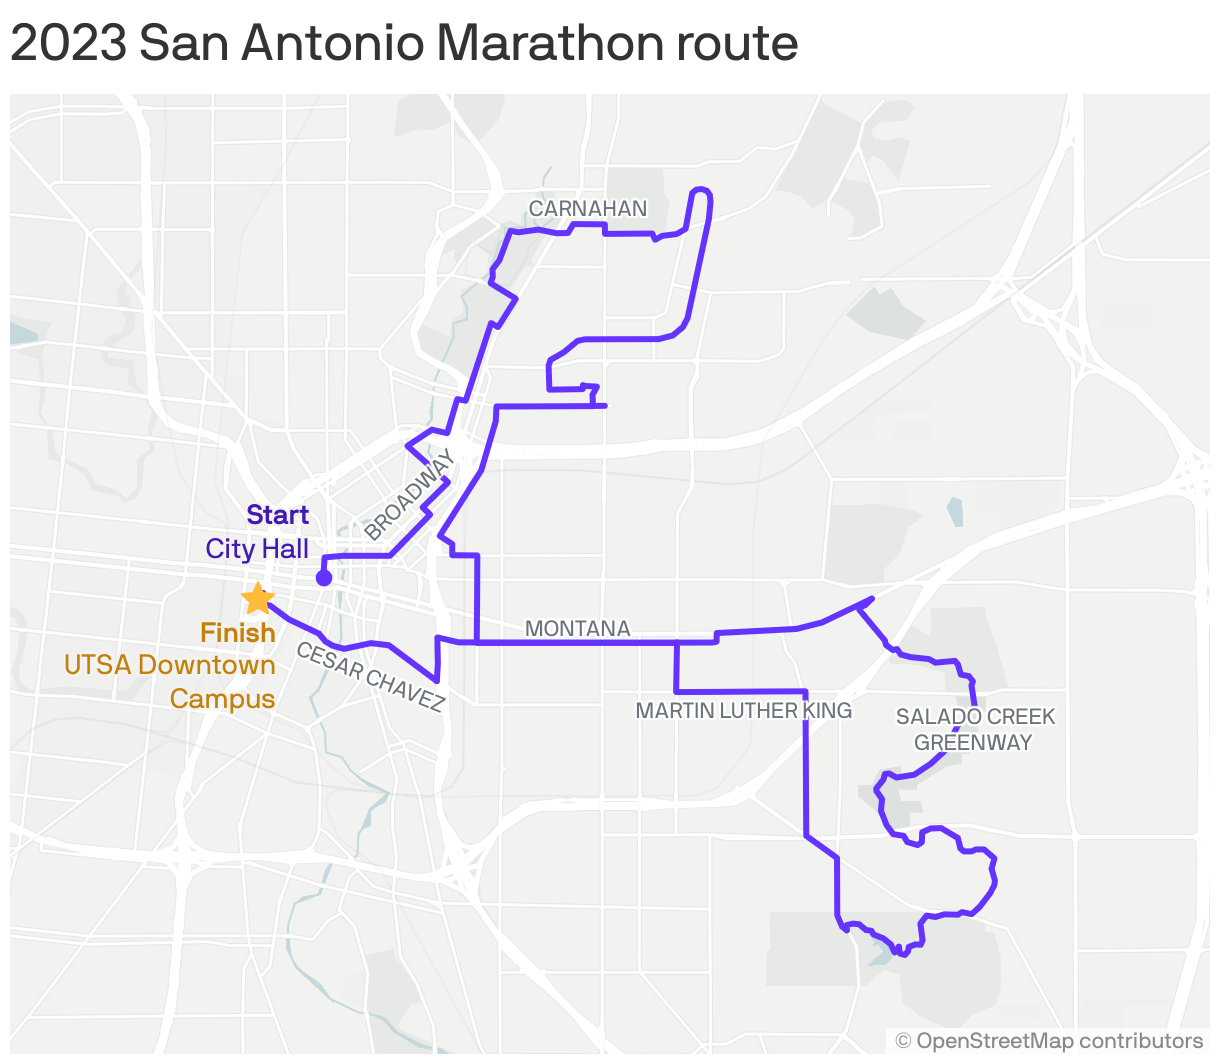 2023 San Antonio Marathon route